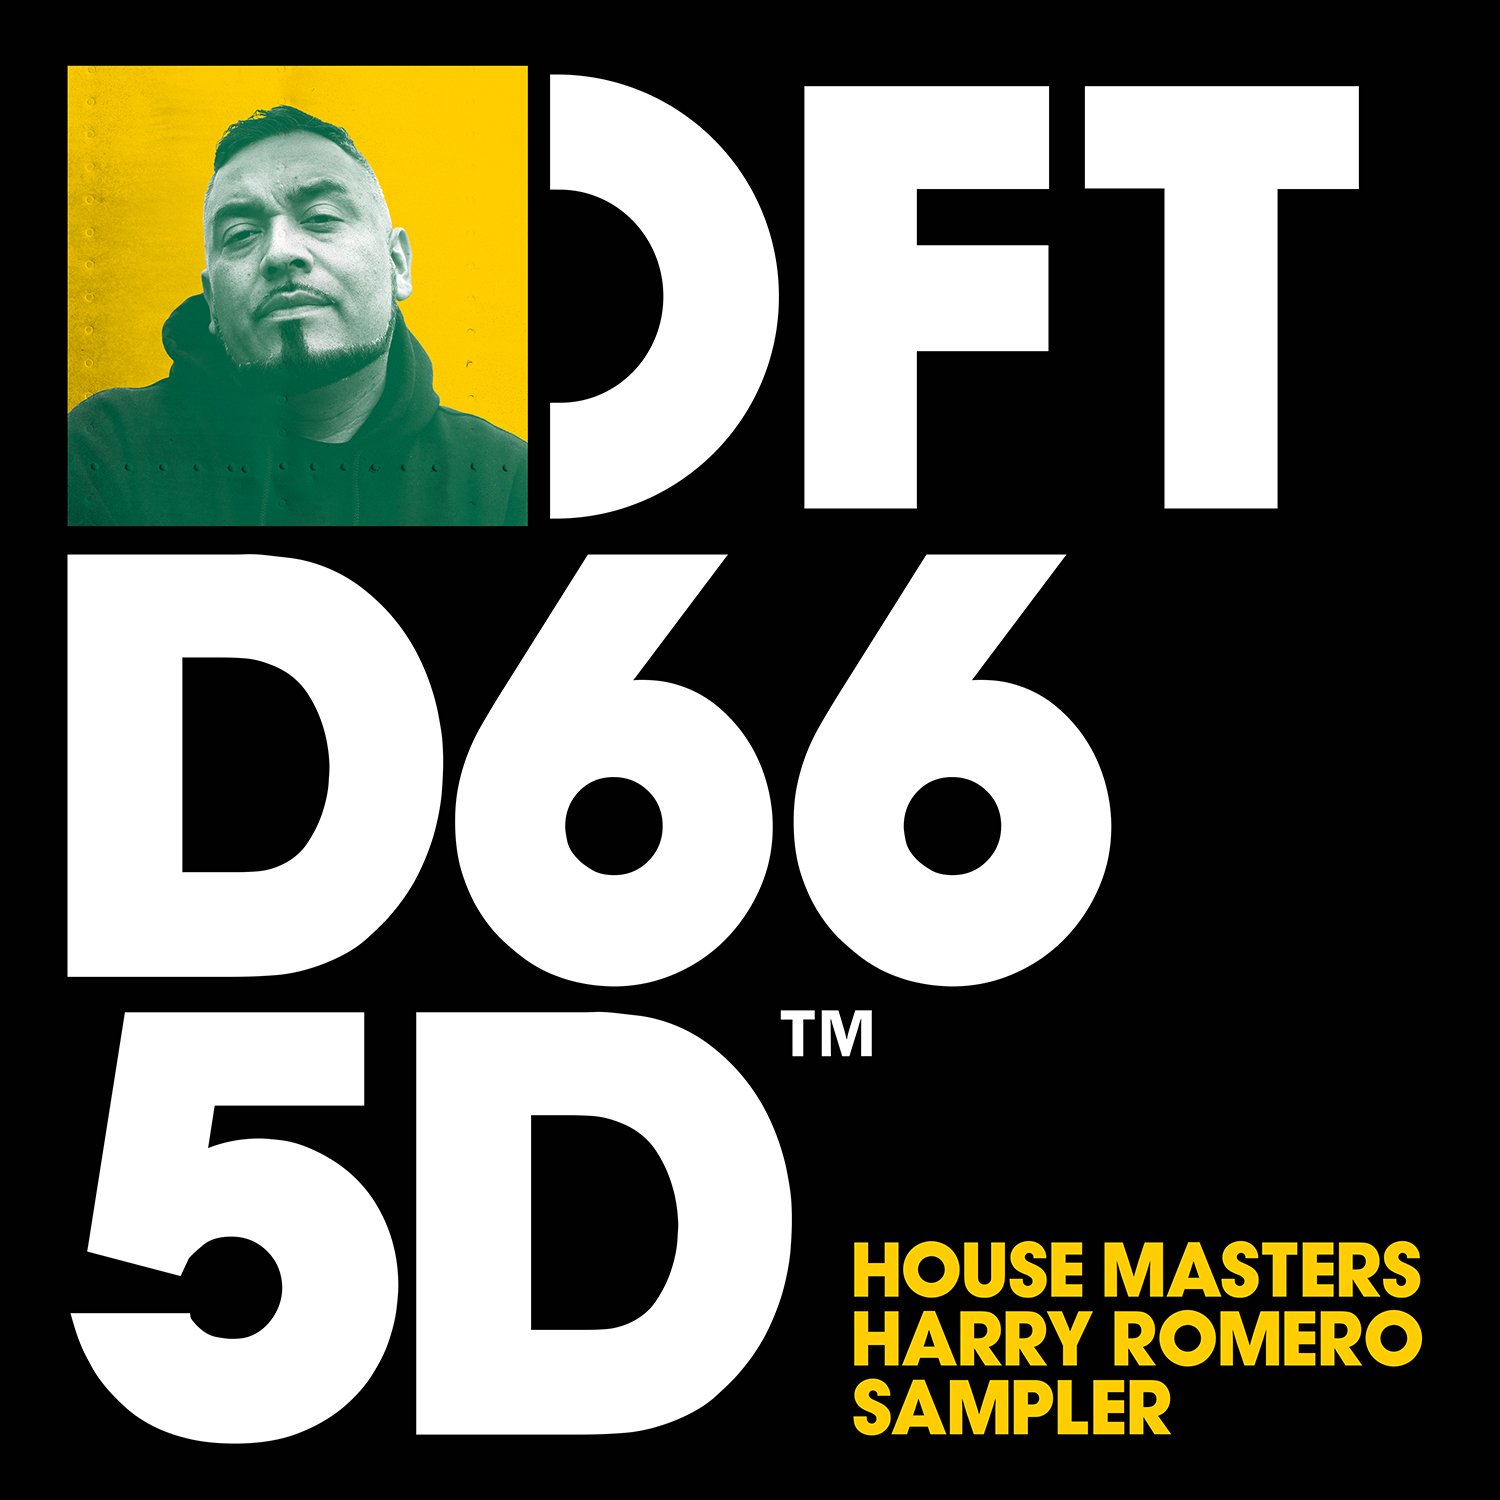 Harry Romero “House Masters” Sampler